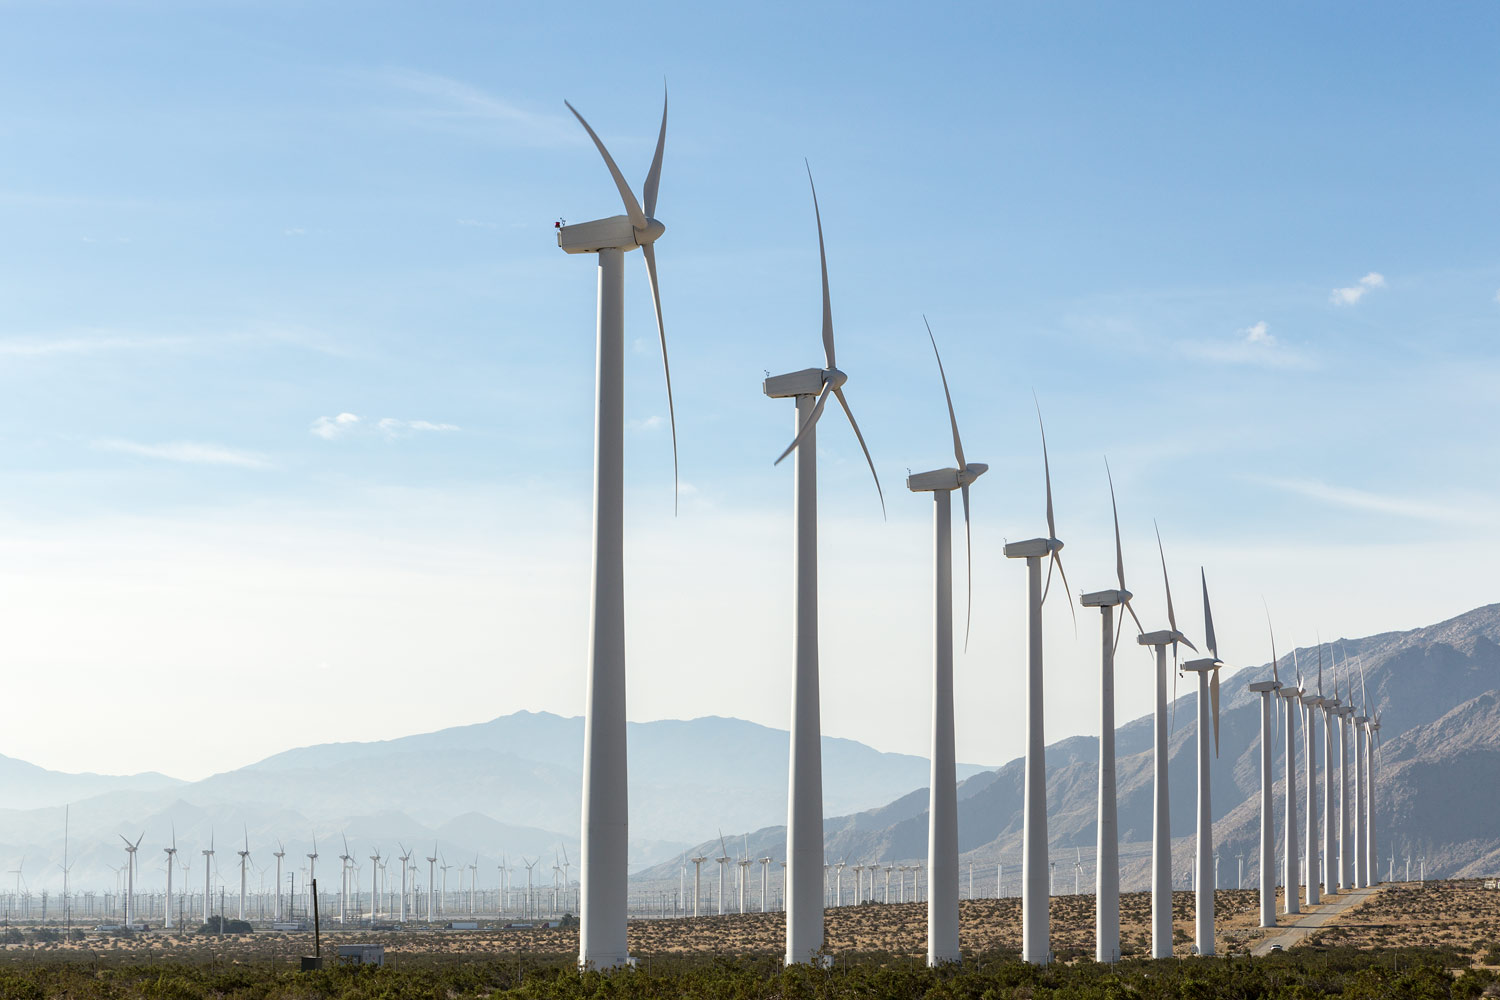  San Gorgonio Pass Wind Farm. Palm Springs, CA. Study #3. 2018 (33°55'28.542" N 116°35'15.426" W)